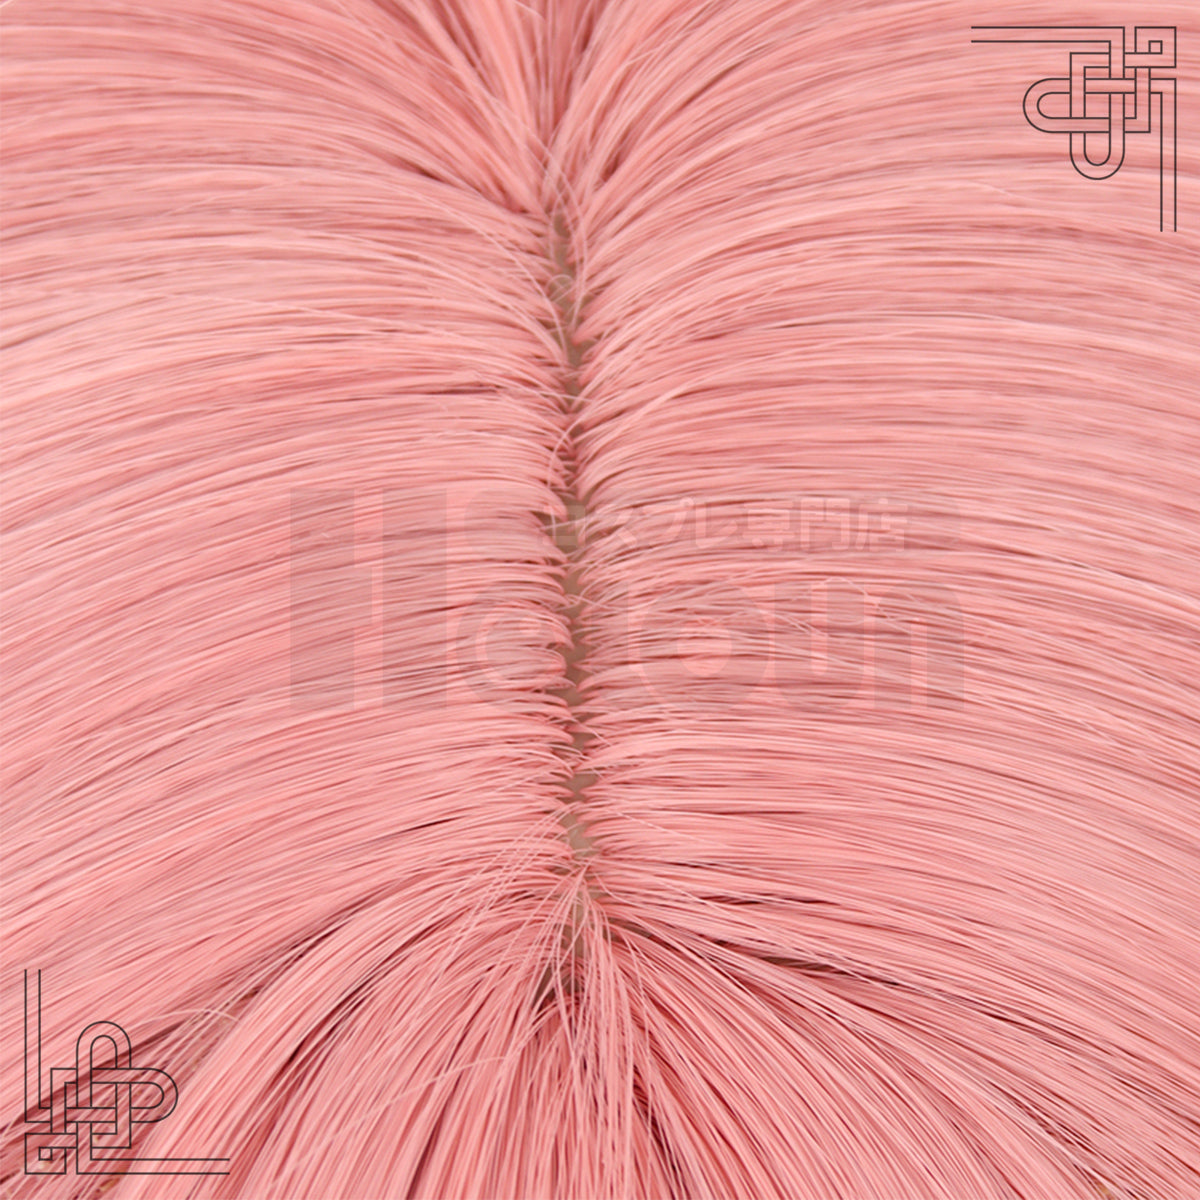 HOLOUN Blue Lock Manga Anime Chigiri Cosplay Wig Rose Net Synthetic Fiber Pink